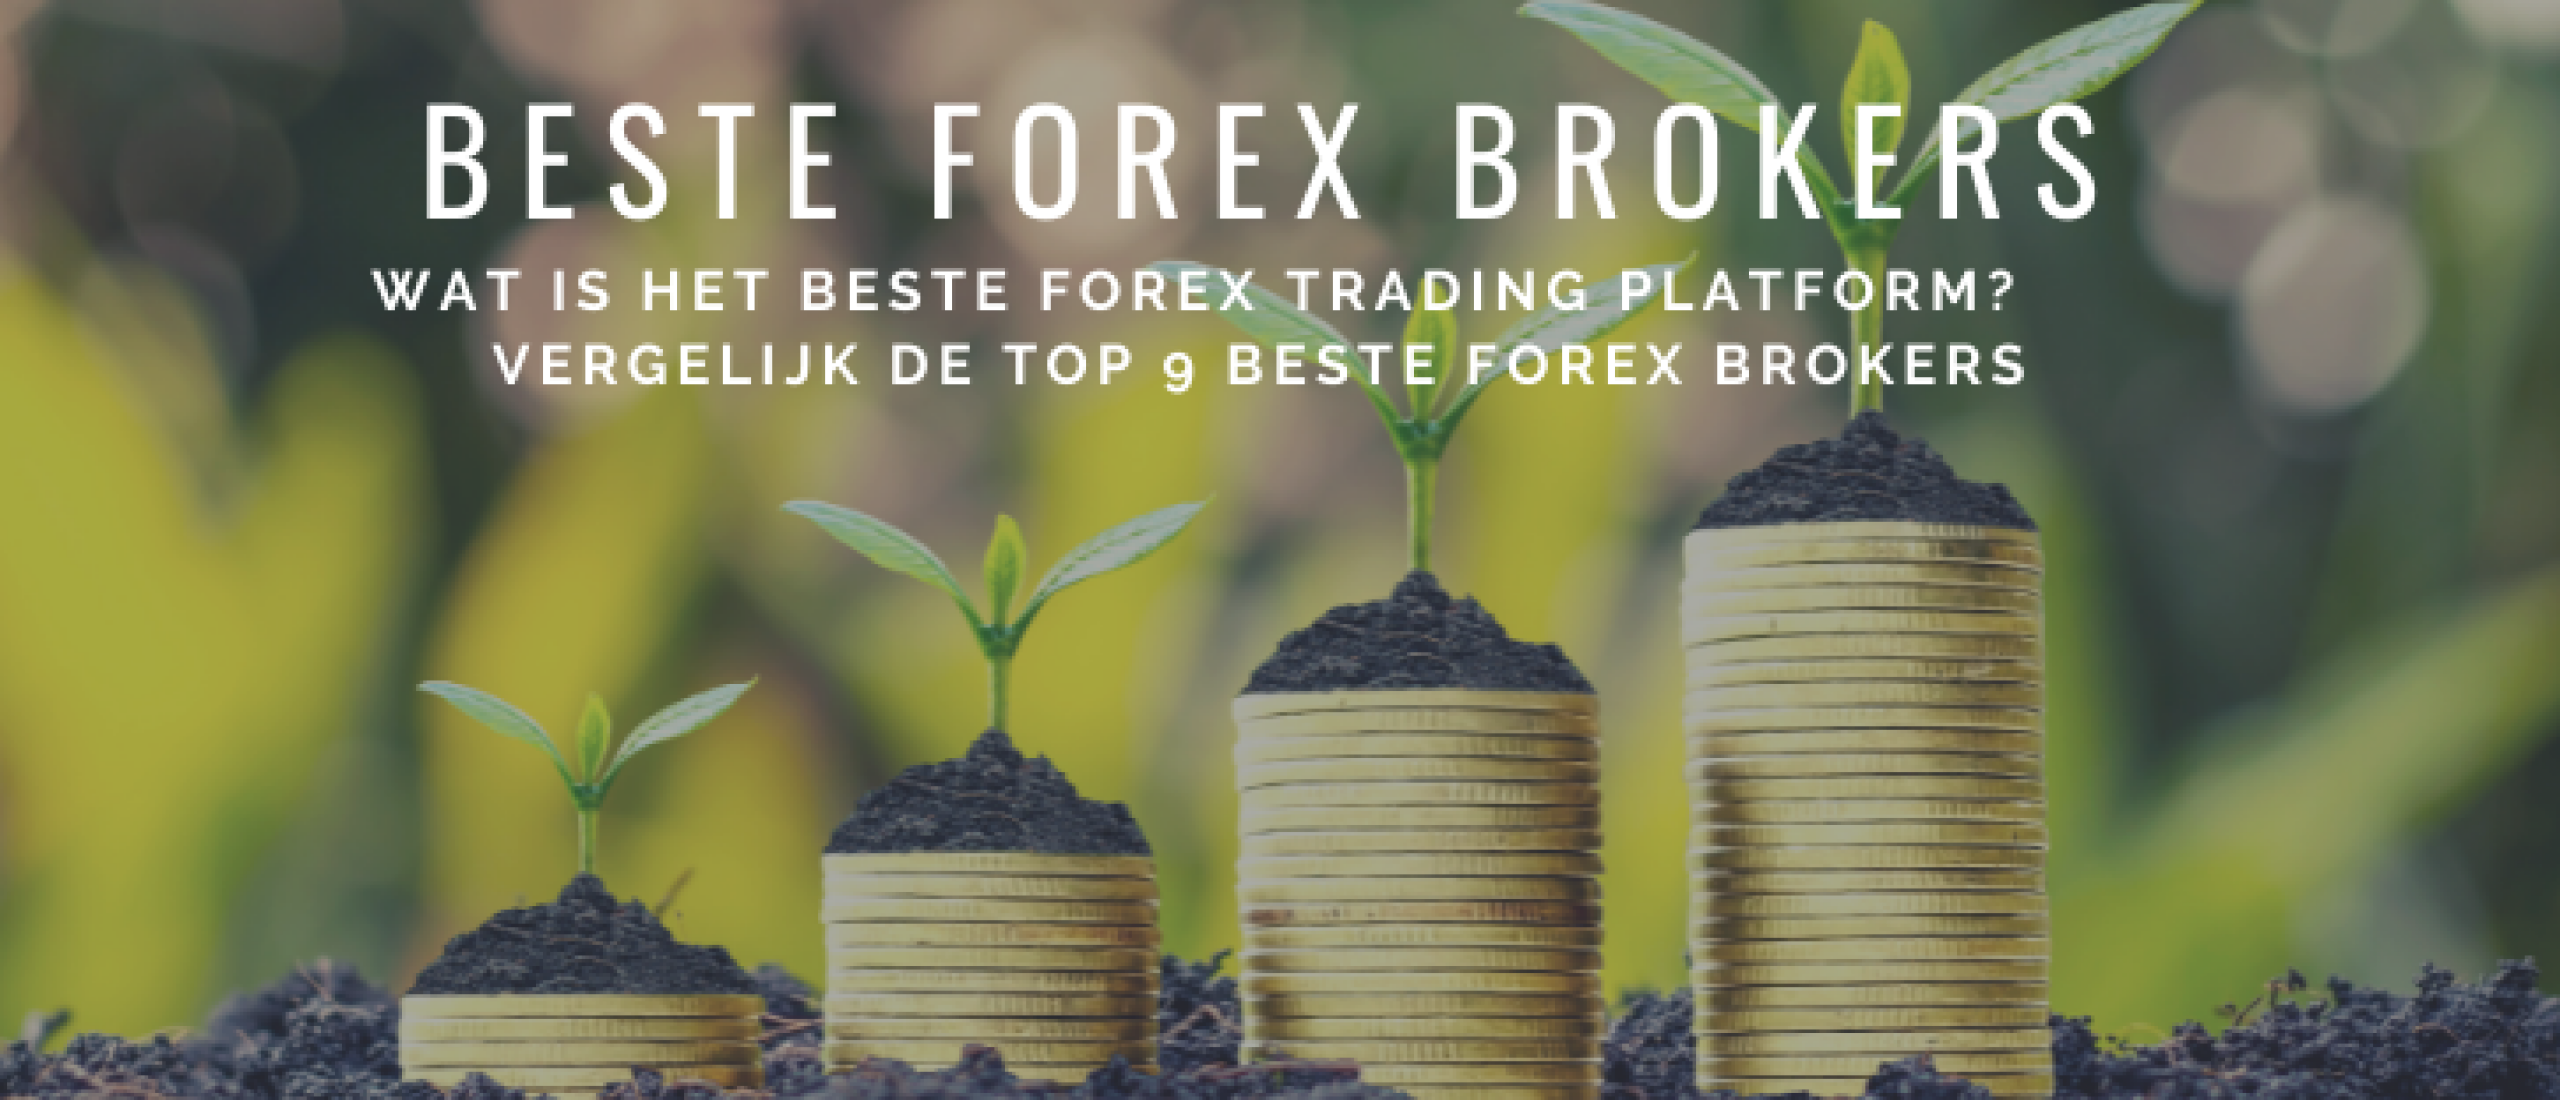 Beste Forex Brokers: TOP 9 Forex Trading Platformen | Happy Investors